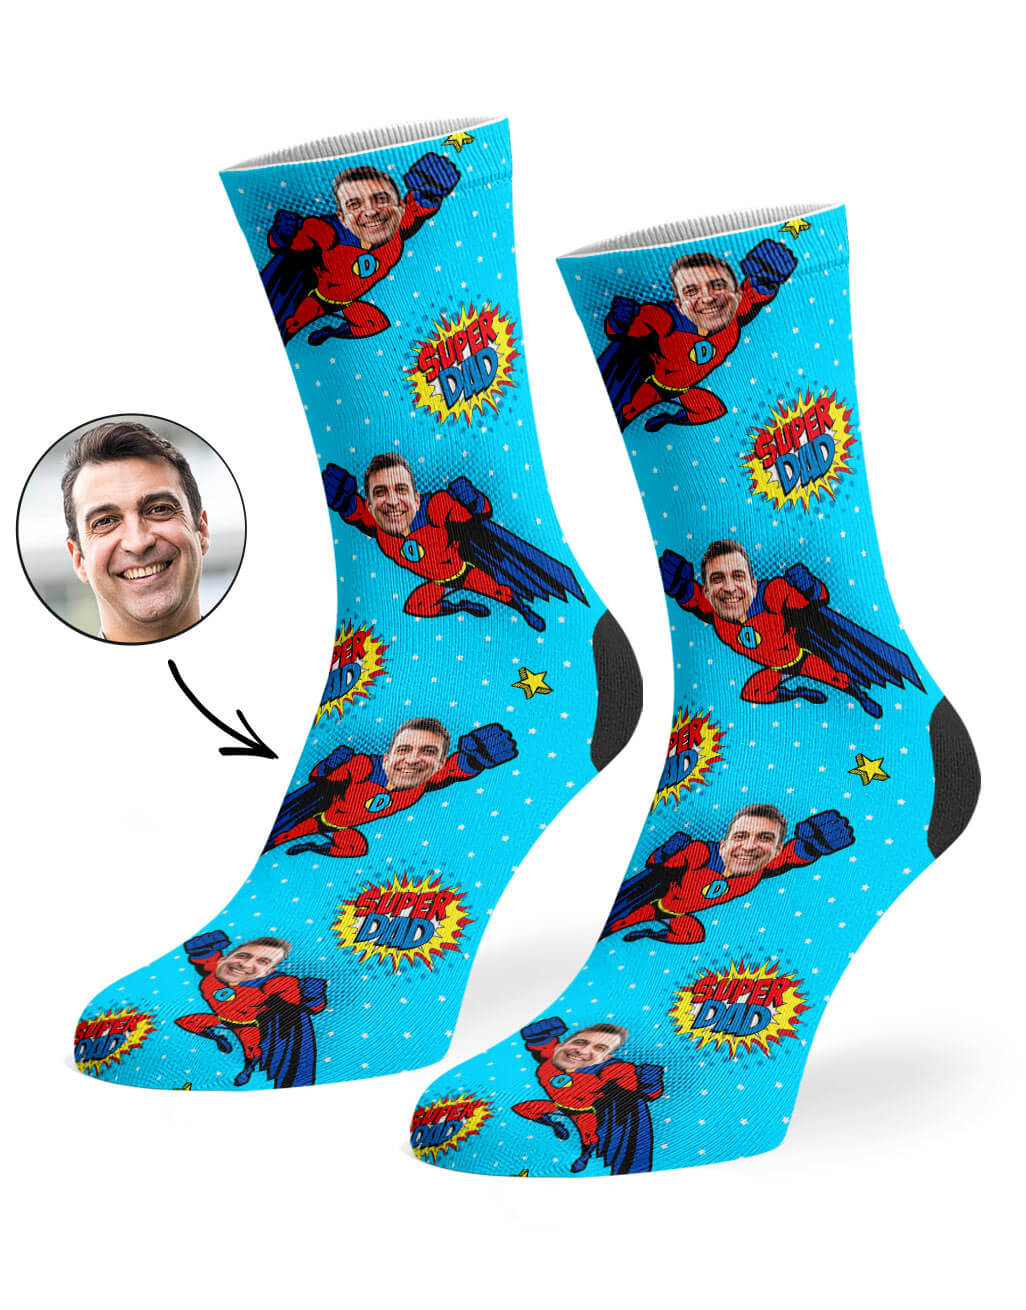 Super Dad Custom Socks